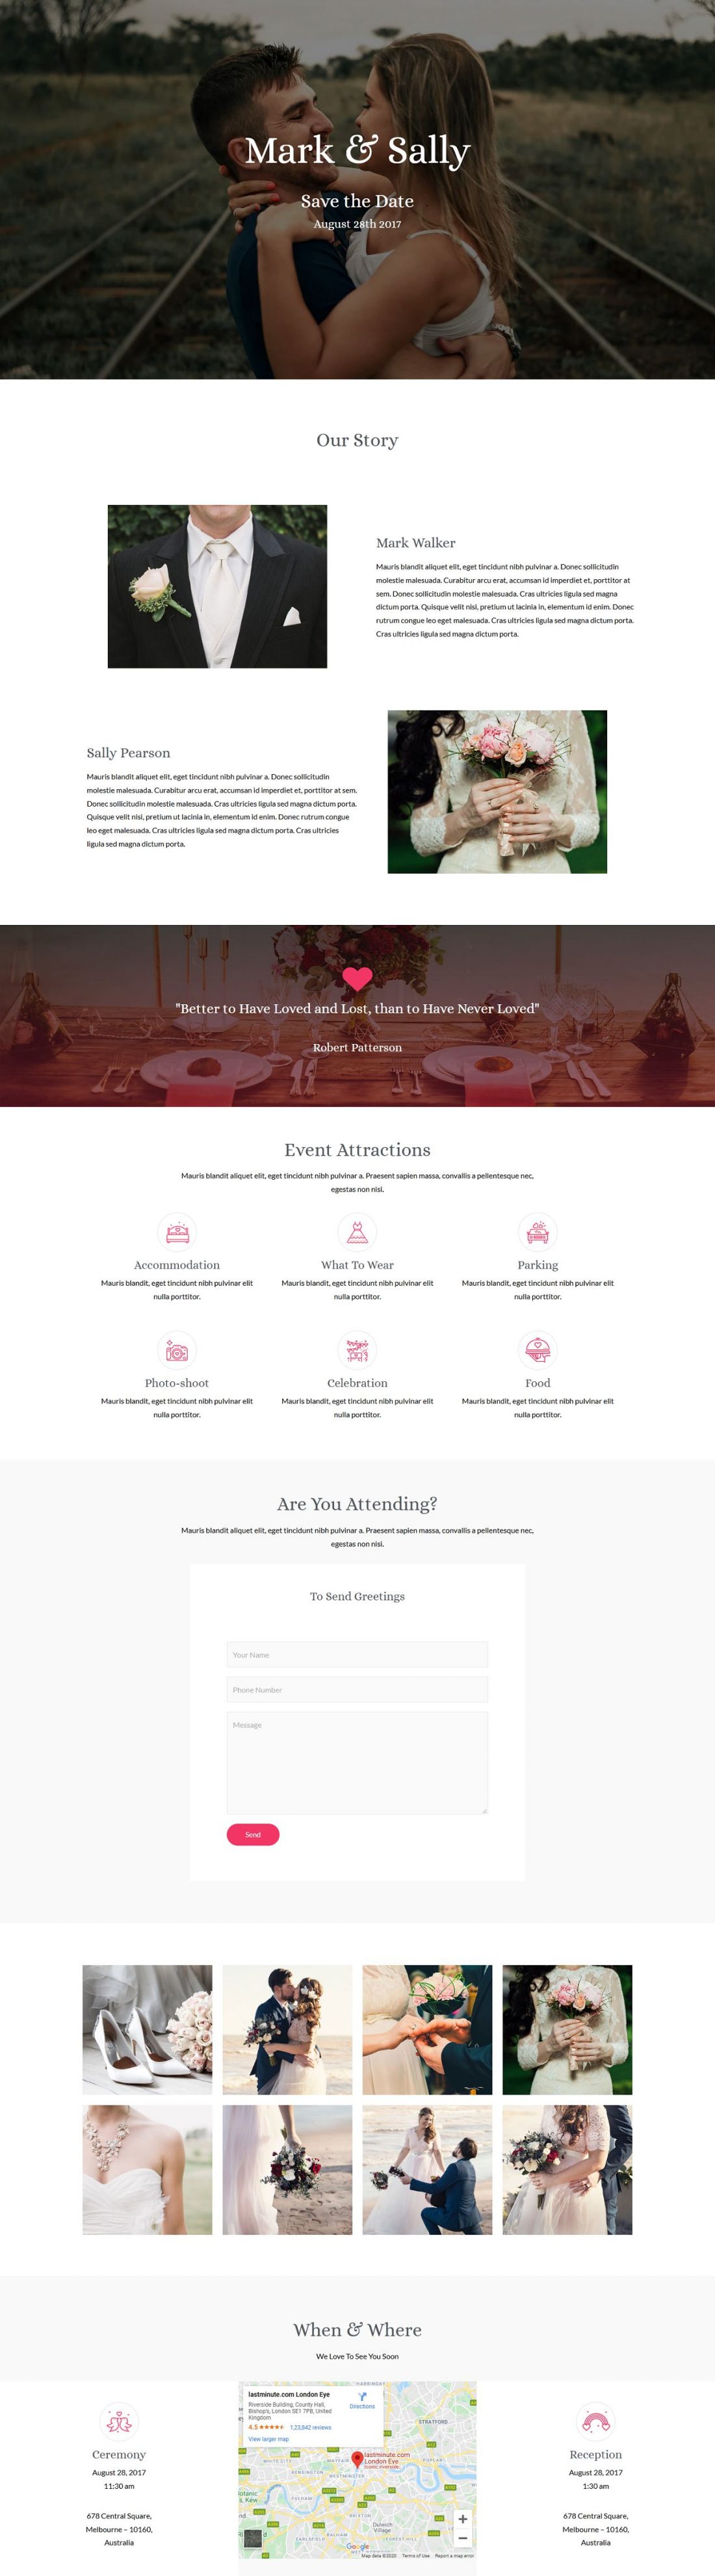 Fagowi.com Website Design Templates For Wedding Invitation - Home Page Image